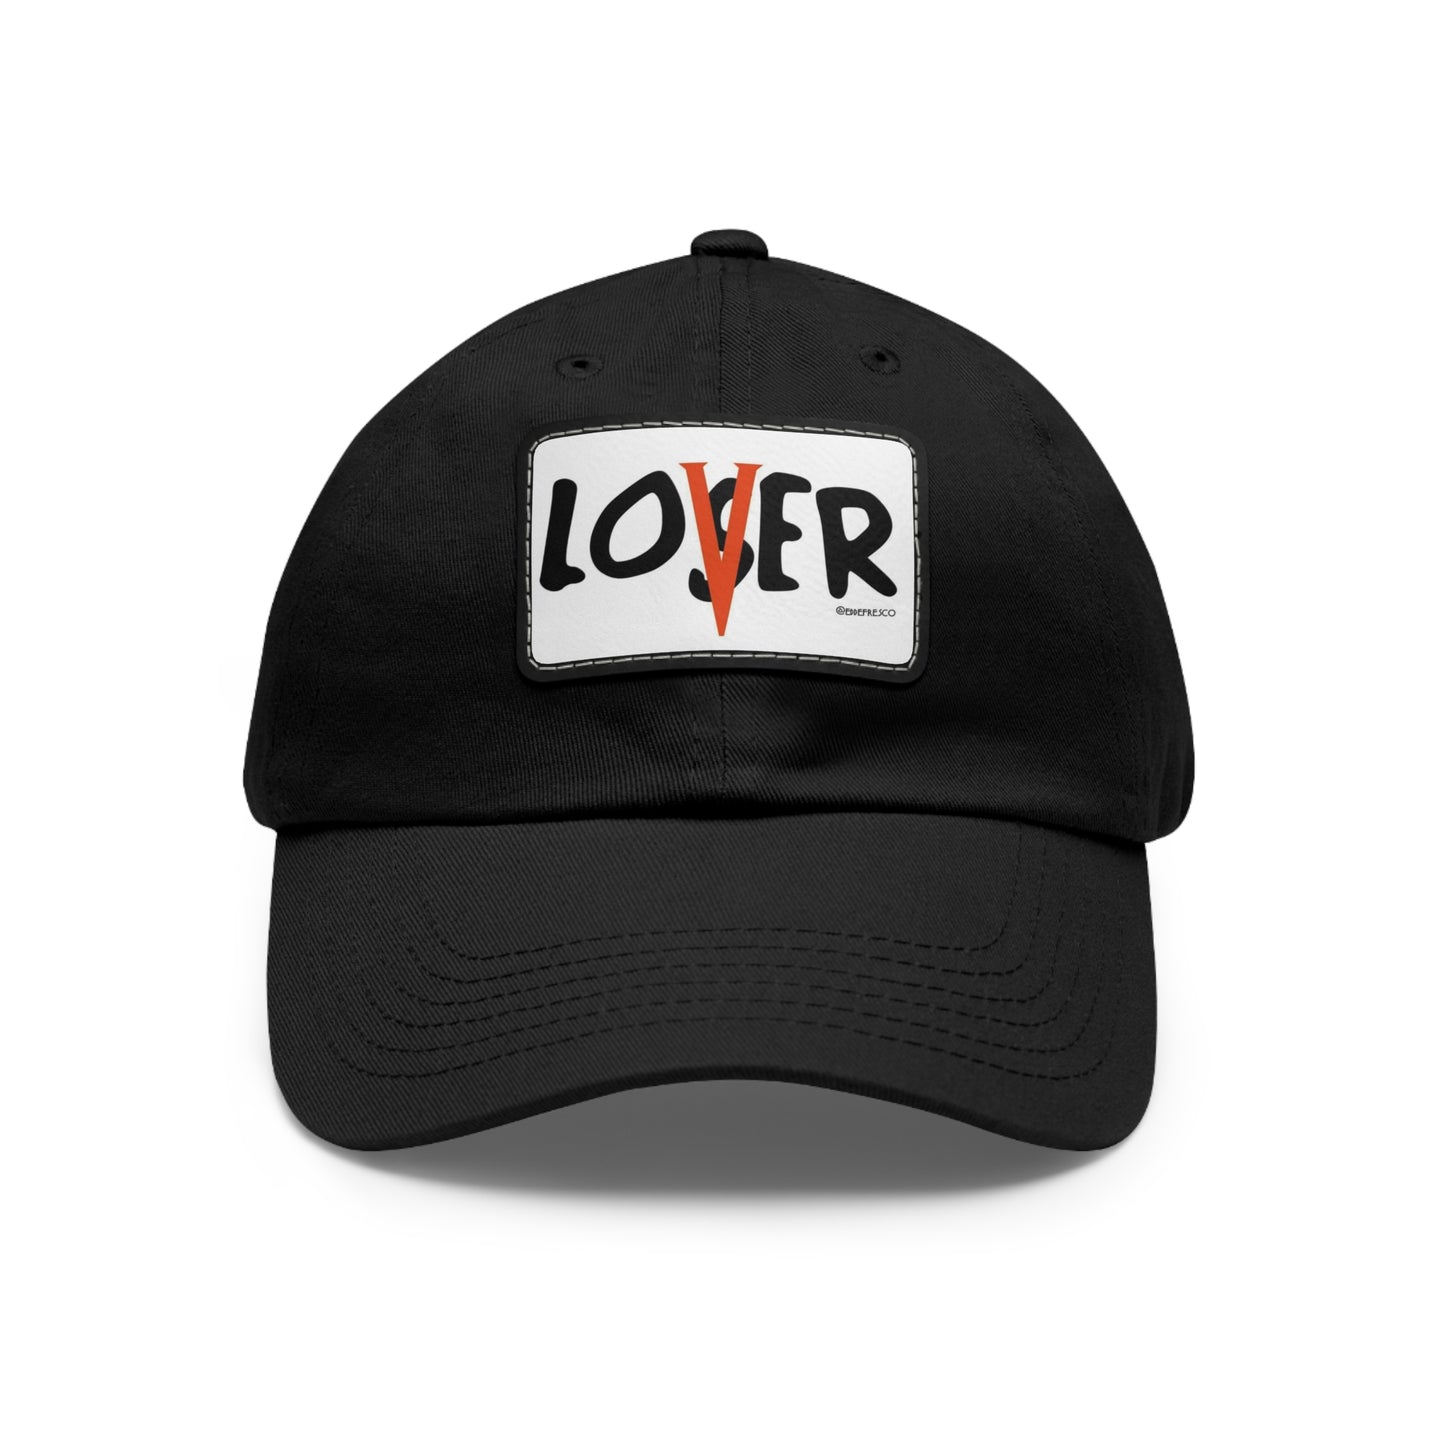 Lover. Loser.